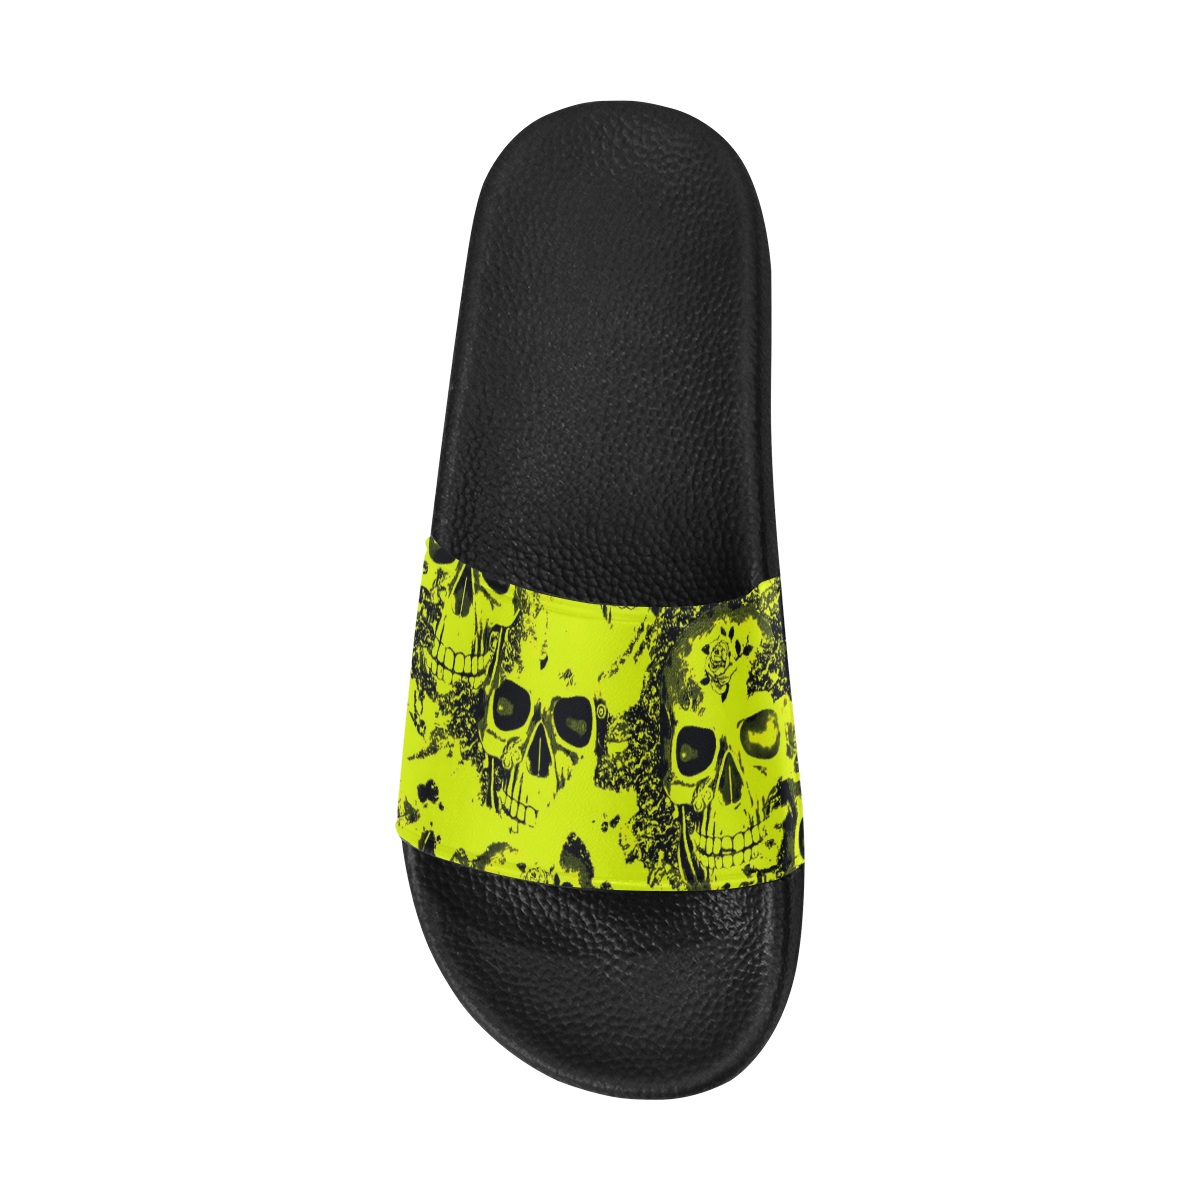 cloudy Skulls black yellow by JamColors Men's Slide Sandals (Model 057)